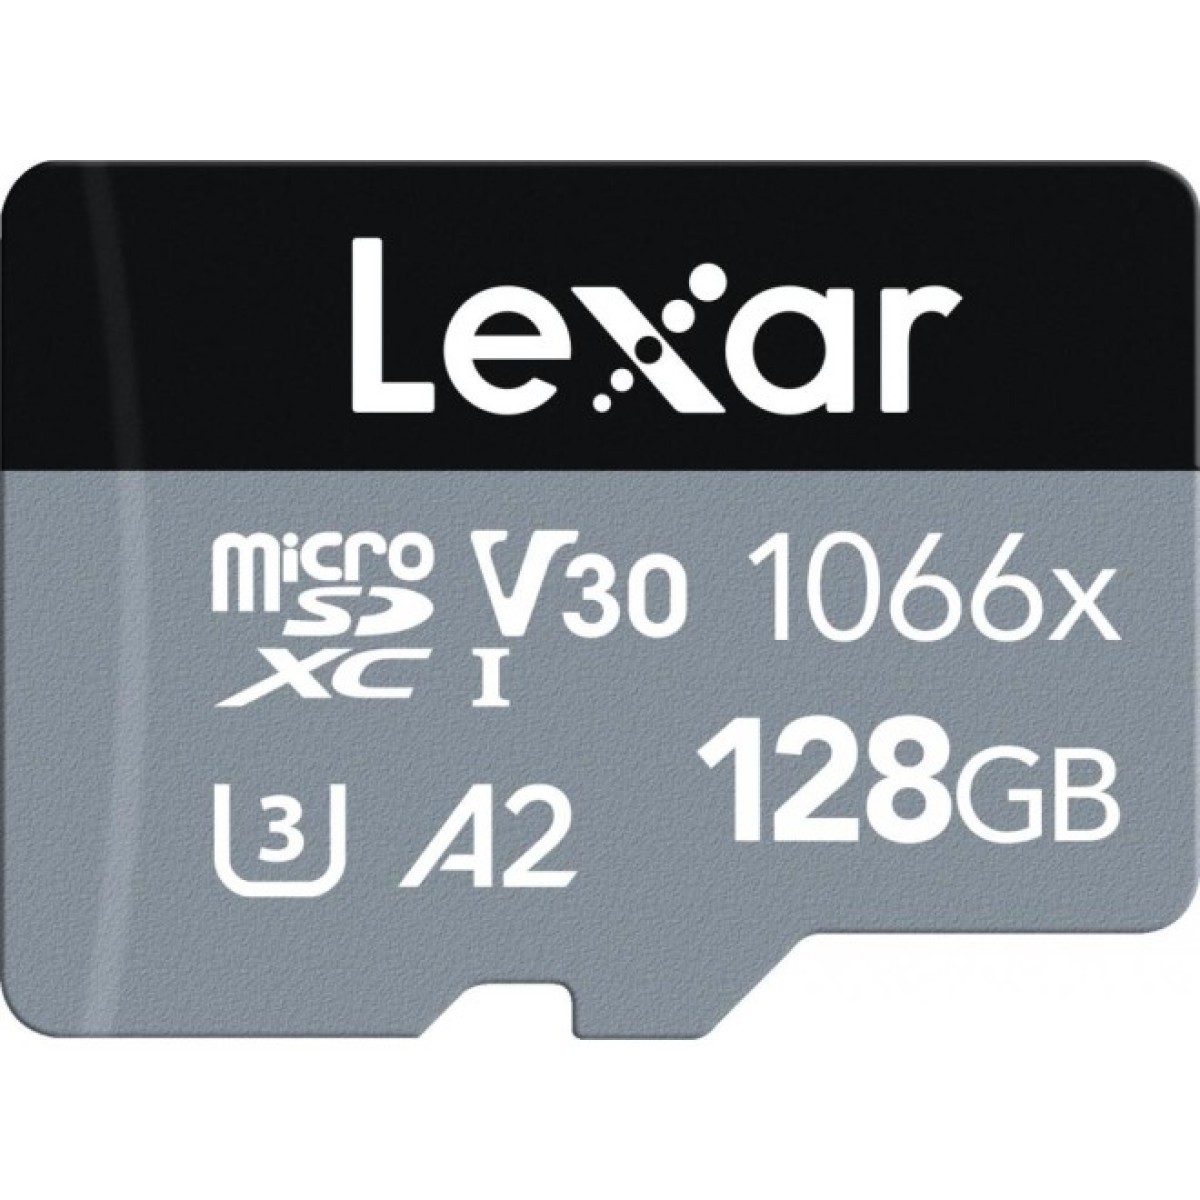 Карта пам'яті Lexar 128GB microSDXC class 10 UHS-I 1066x Silver (LMS1066128G-BNANG) 256_256.jpg